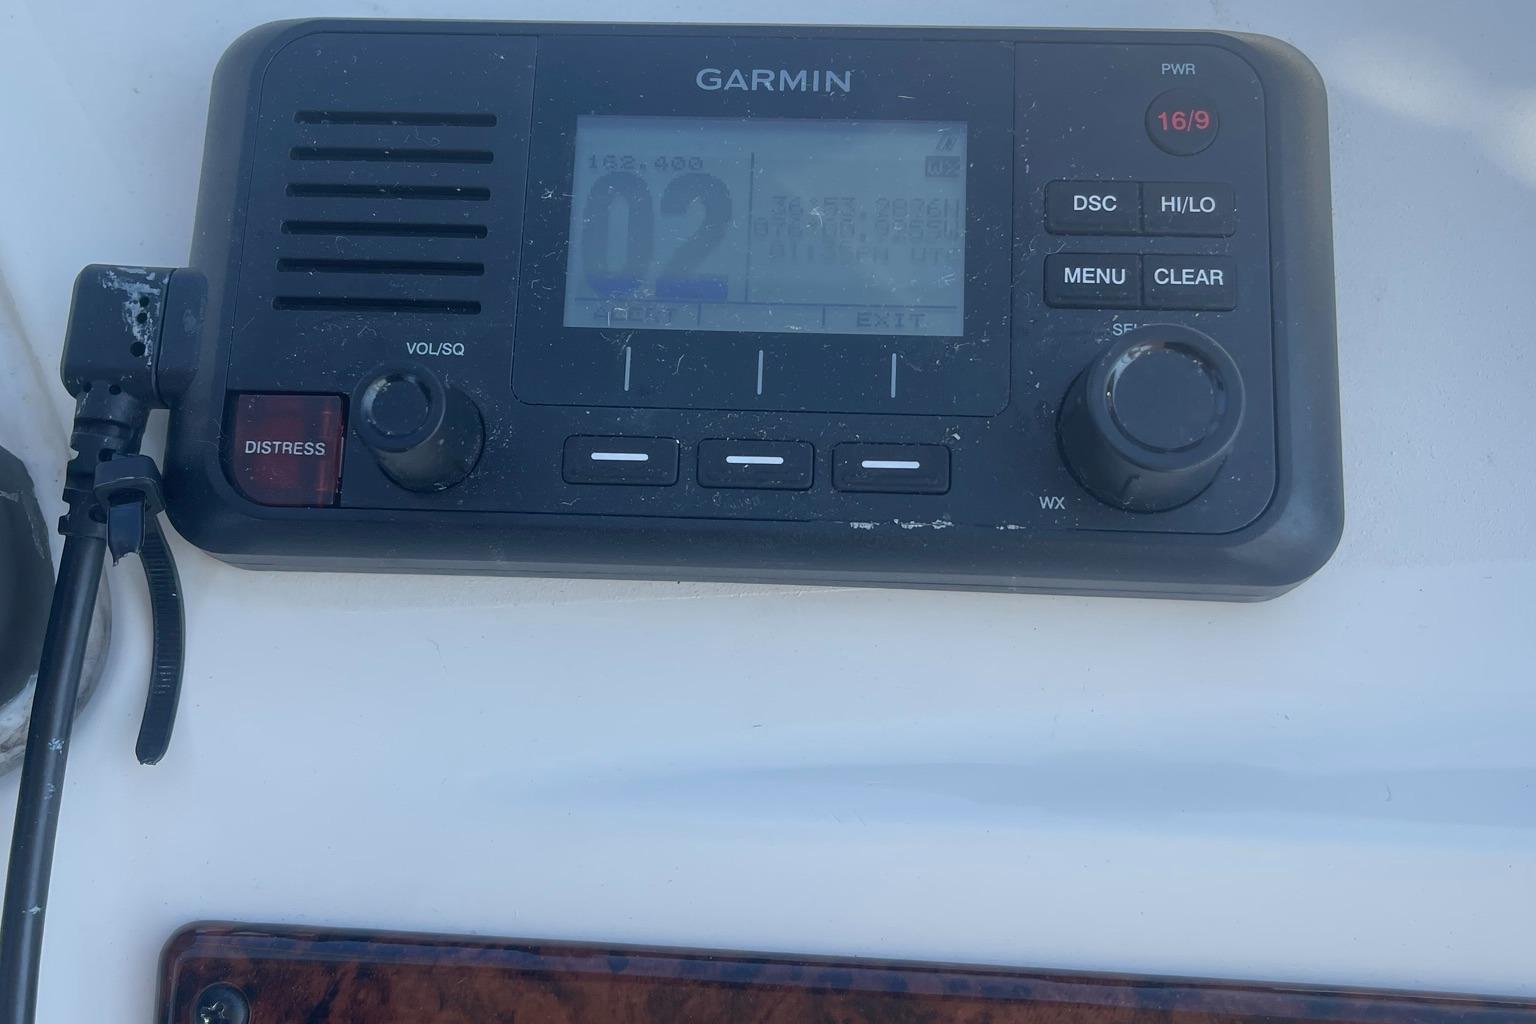 UPGRADED GARMIN VHF RADIO